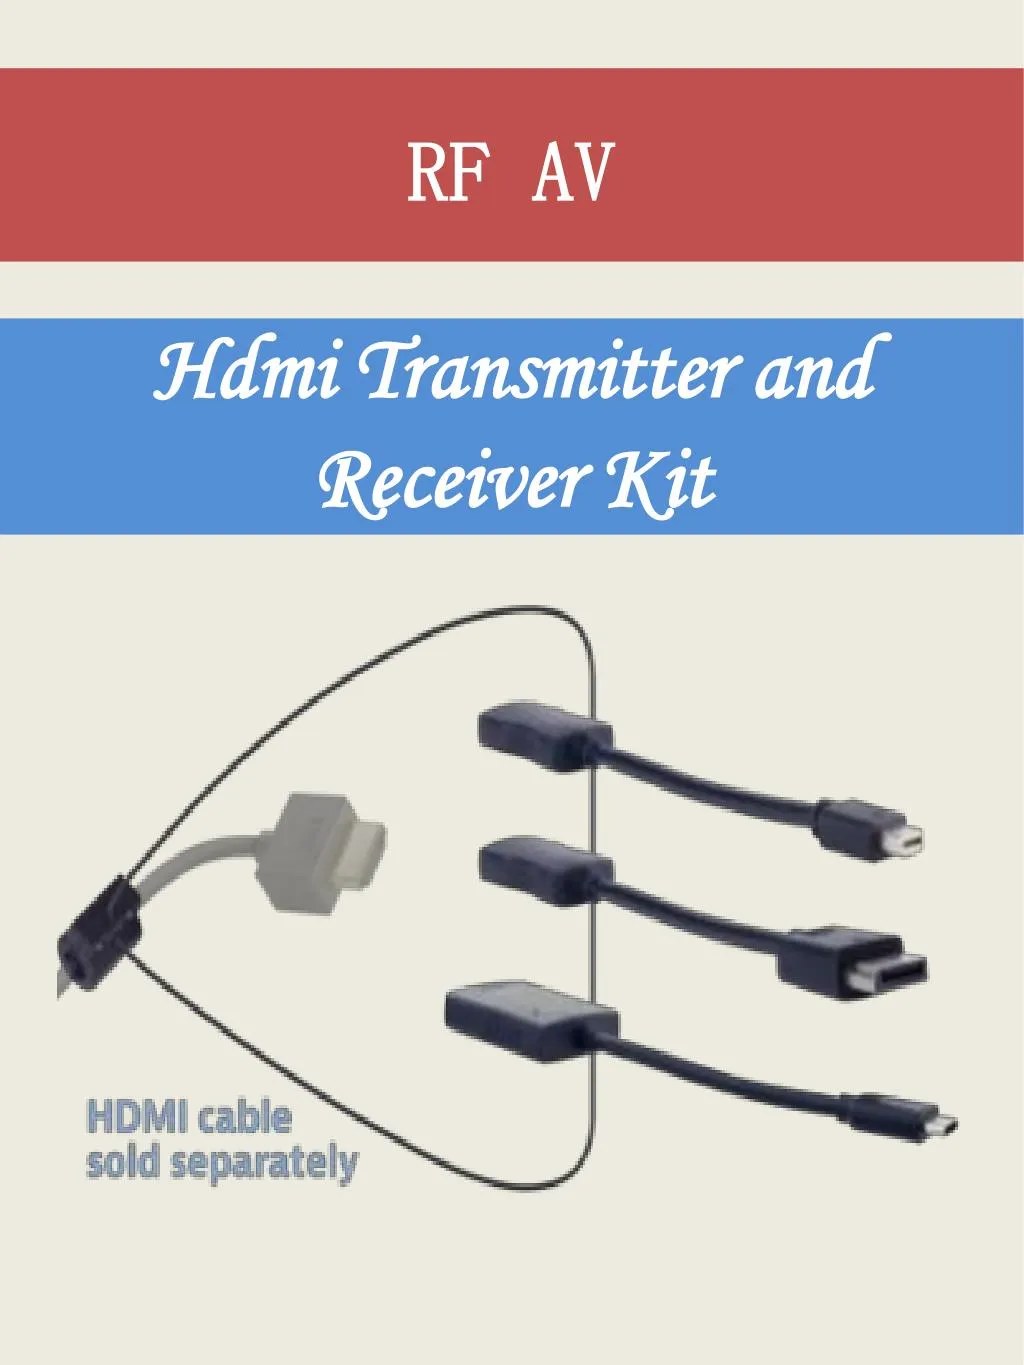 hdmi transmitter and receiver kit